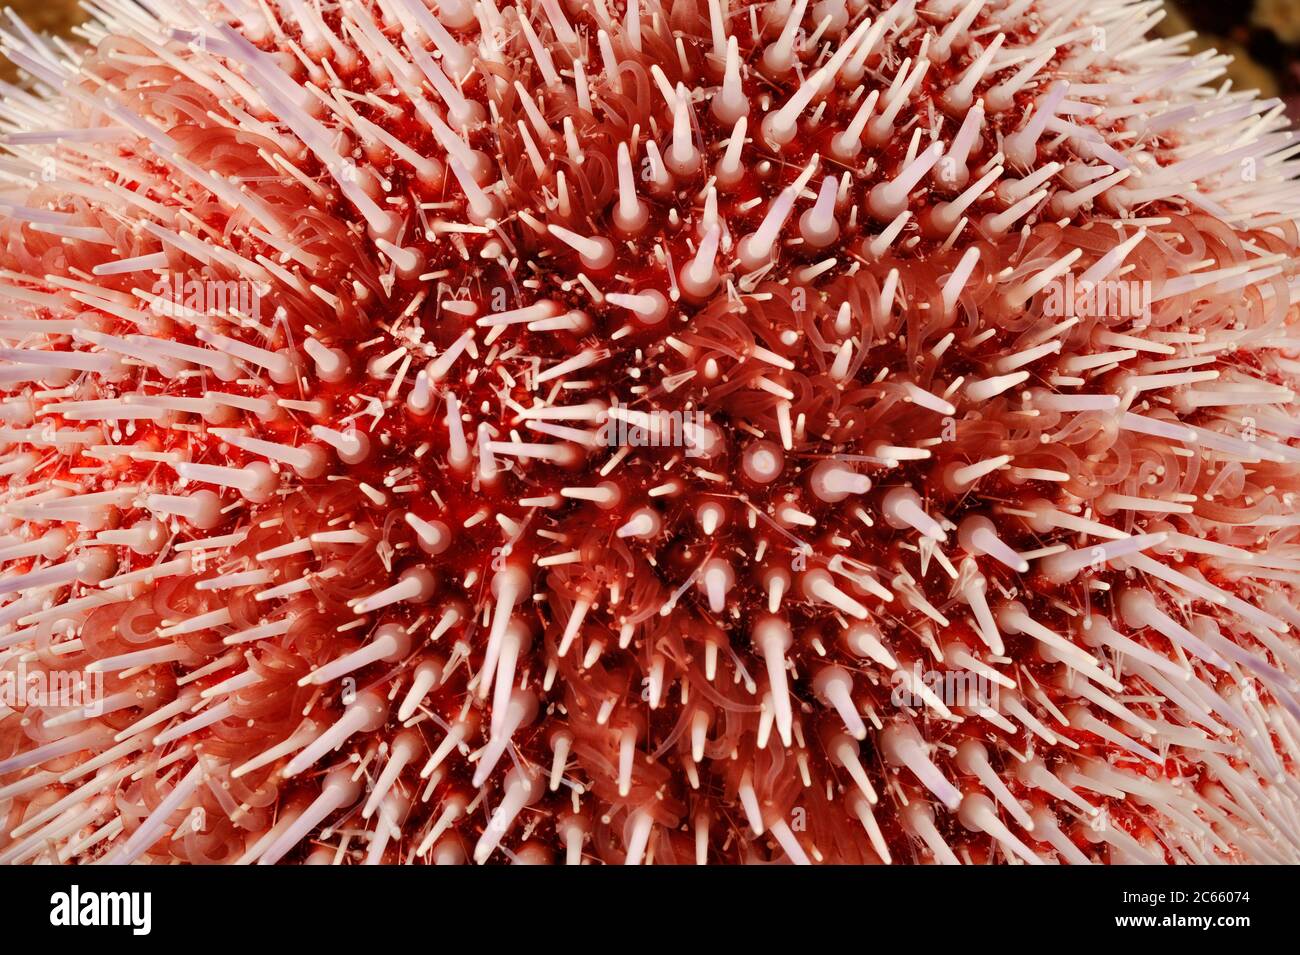 Edible sea urchin (Echinus esculentus), Atlantic Ocean, Strømsholmen, North West Norway Stock Photo